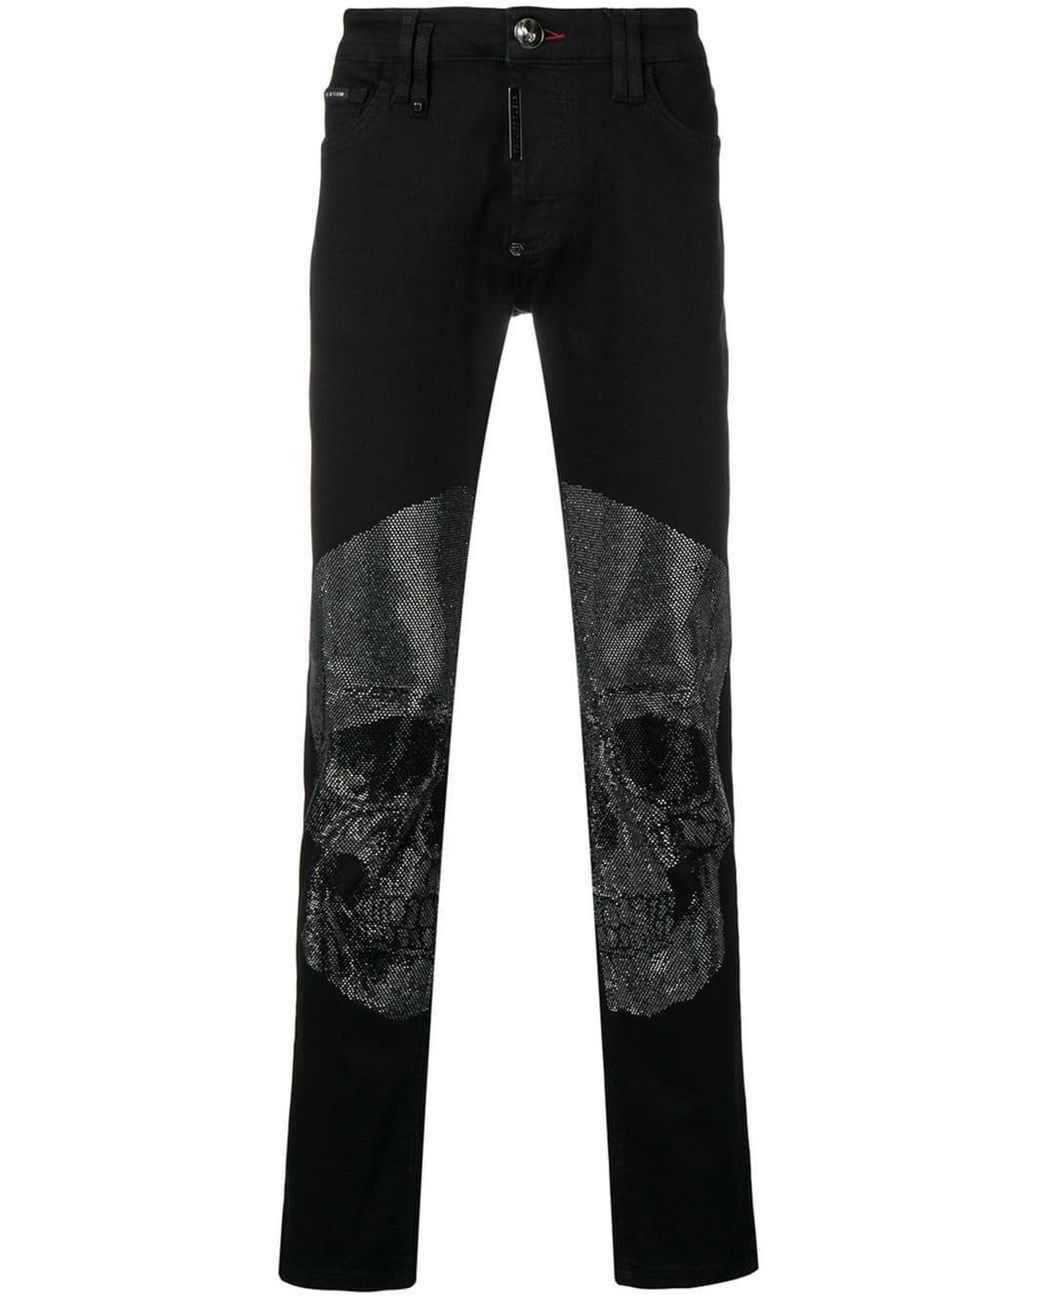 Philipp Plein Denim Super Straight-cut Skull Jeans in Black for Men - Lyst